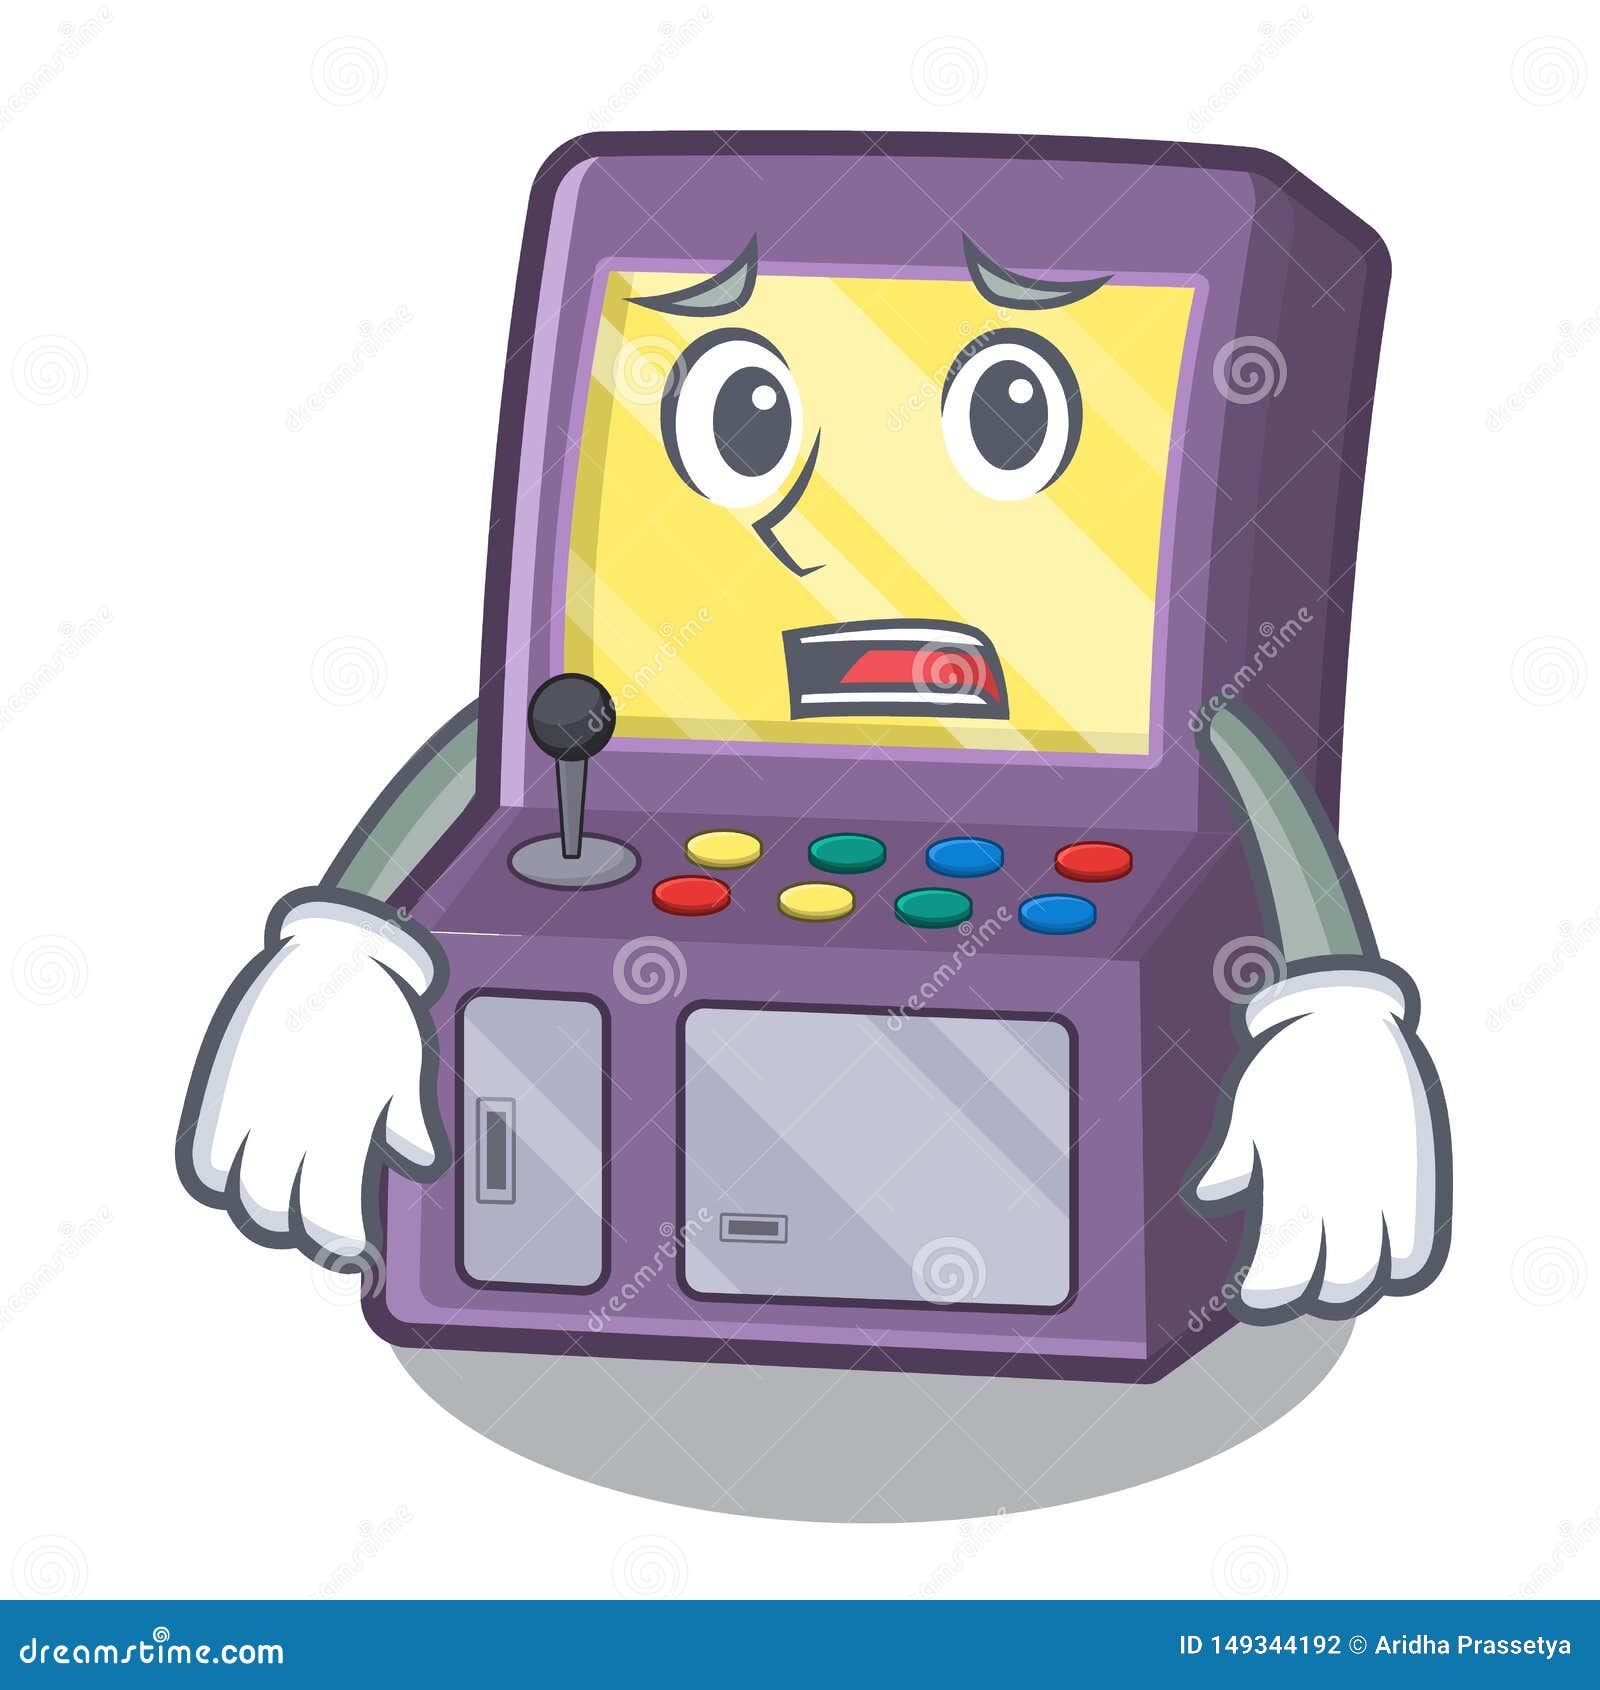 Afraid Arcade Machine Next To Mascot Table Stock Vector - Illustration ...